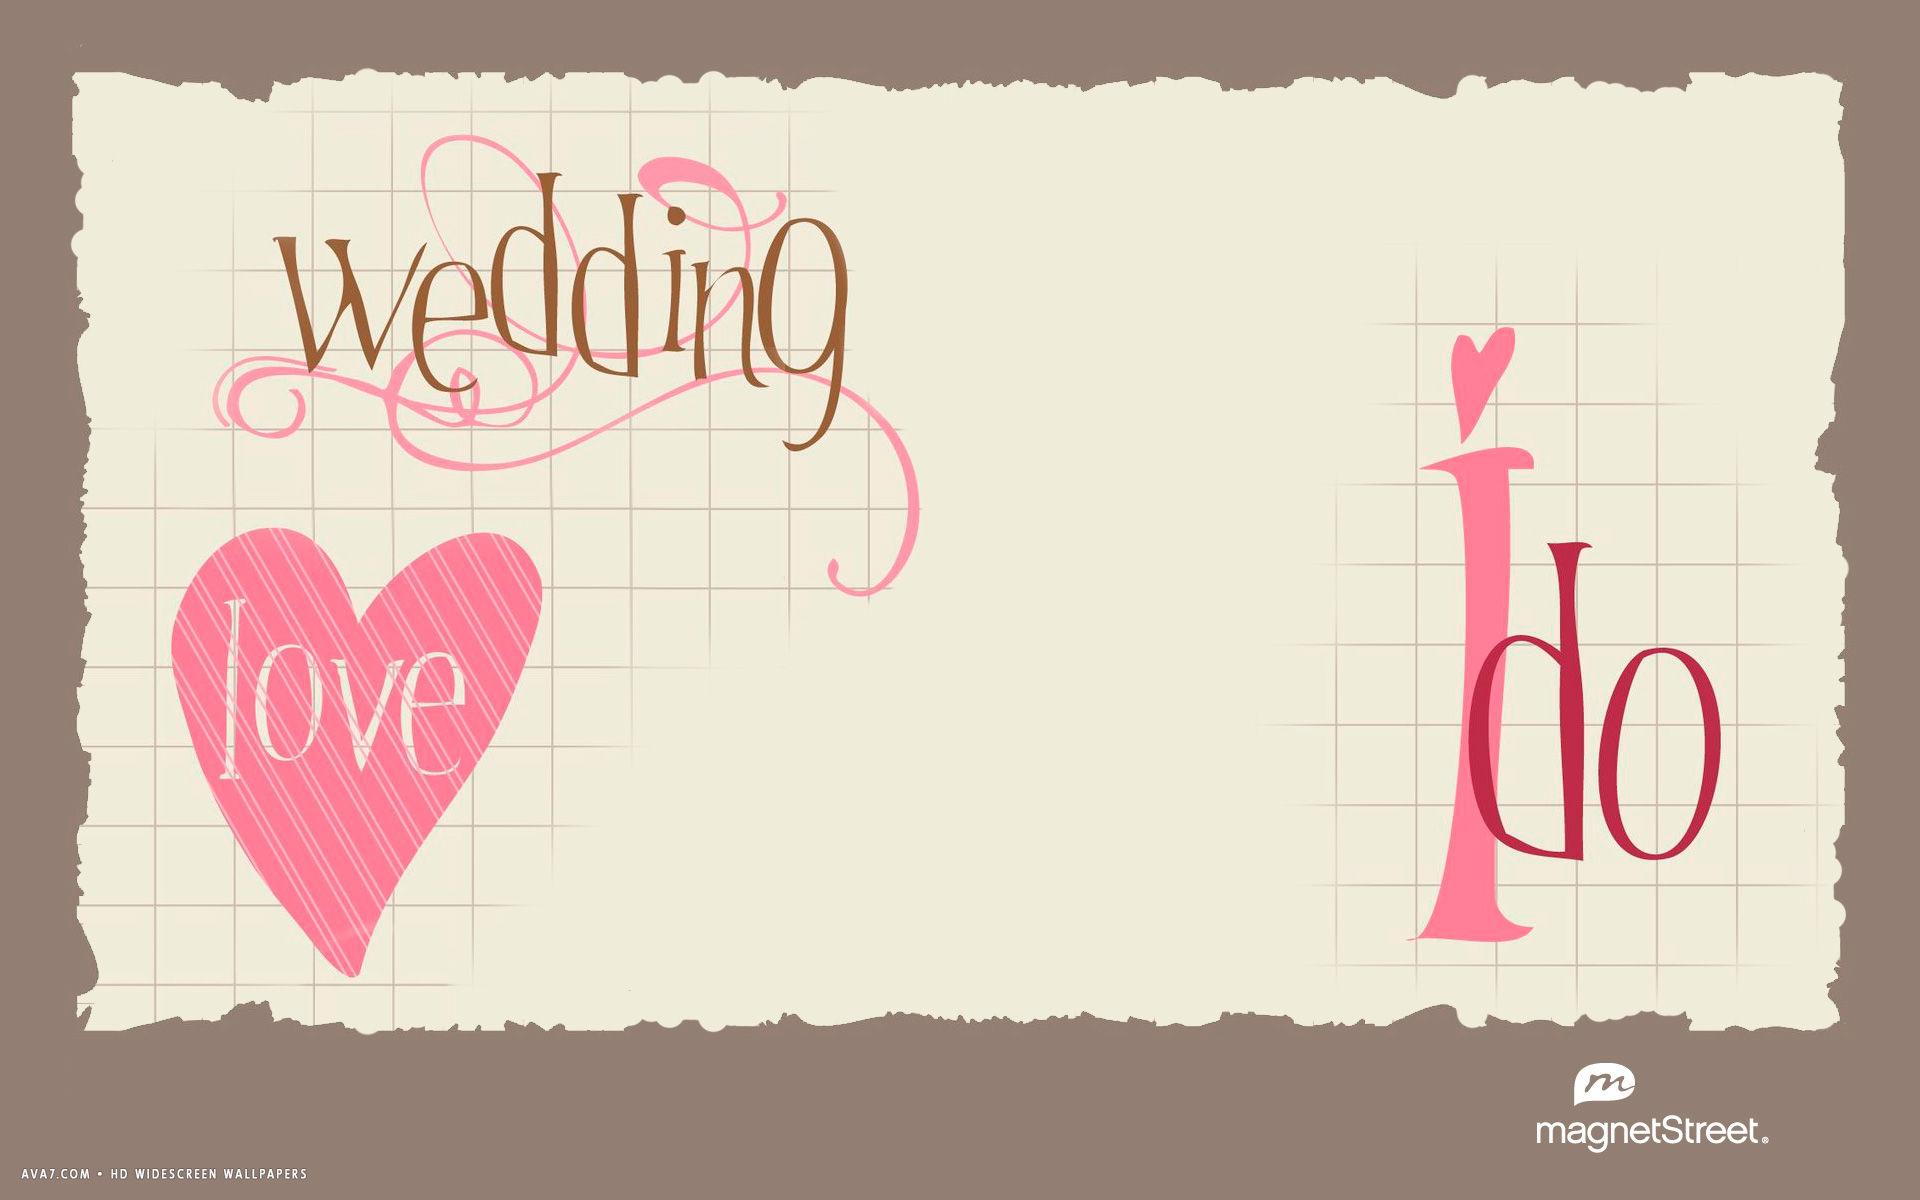 wedding love i do heart card letters words hd widescreen wallpaper